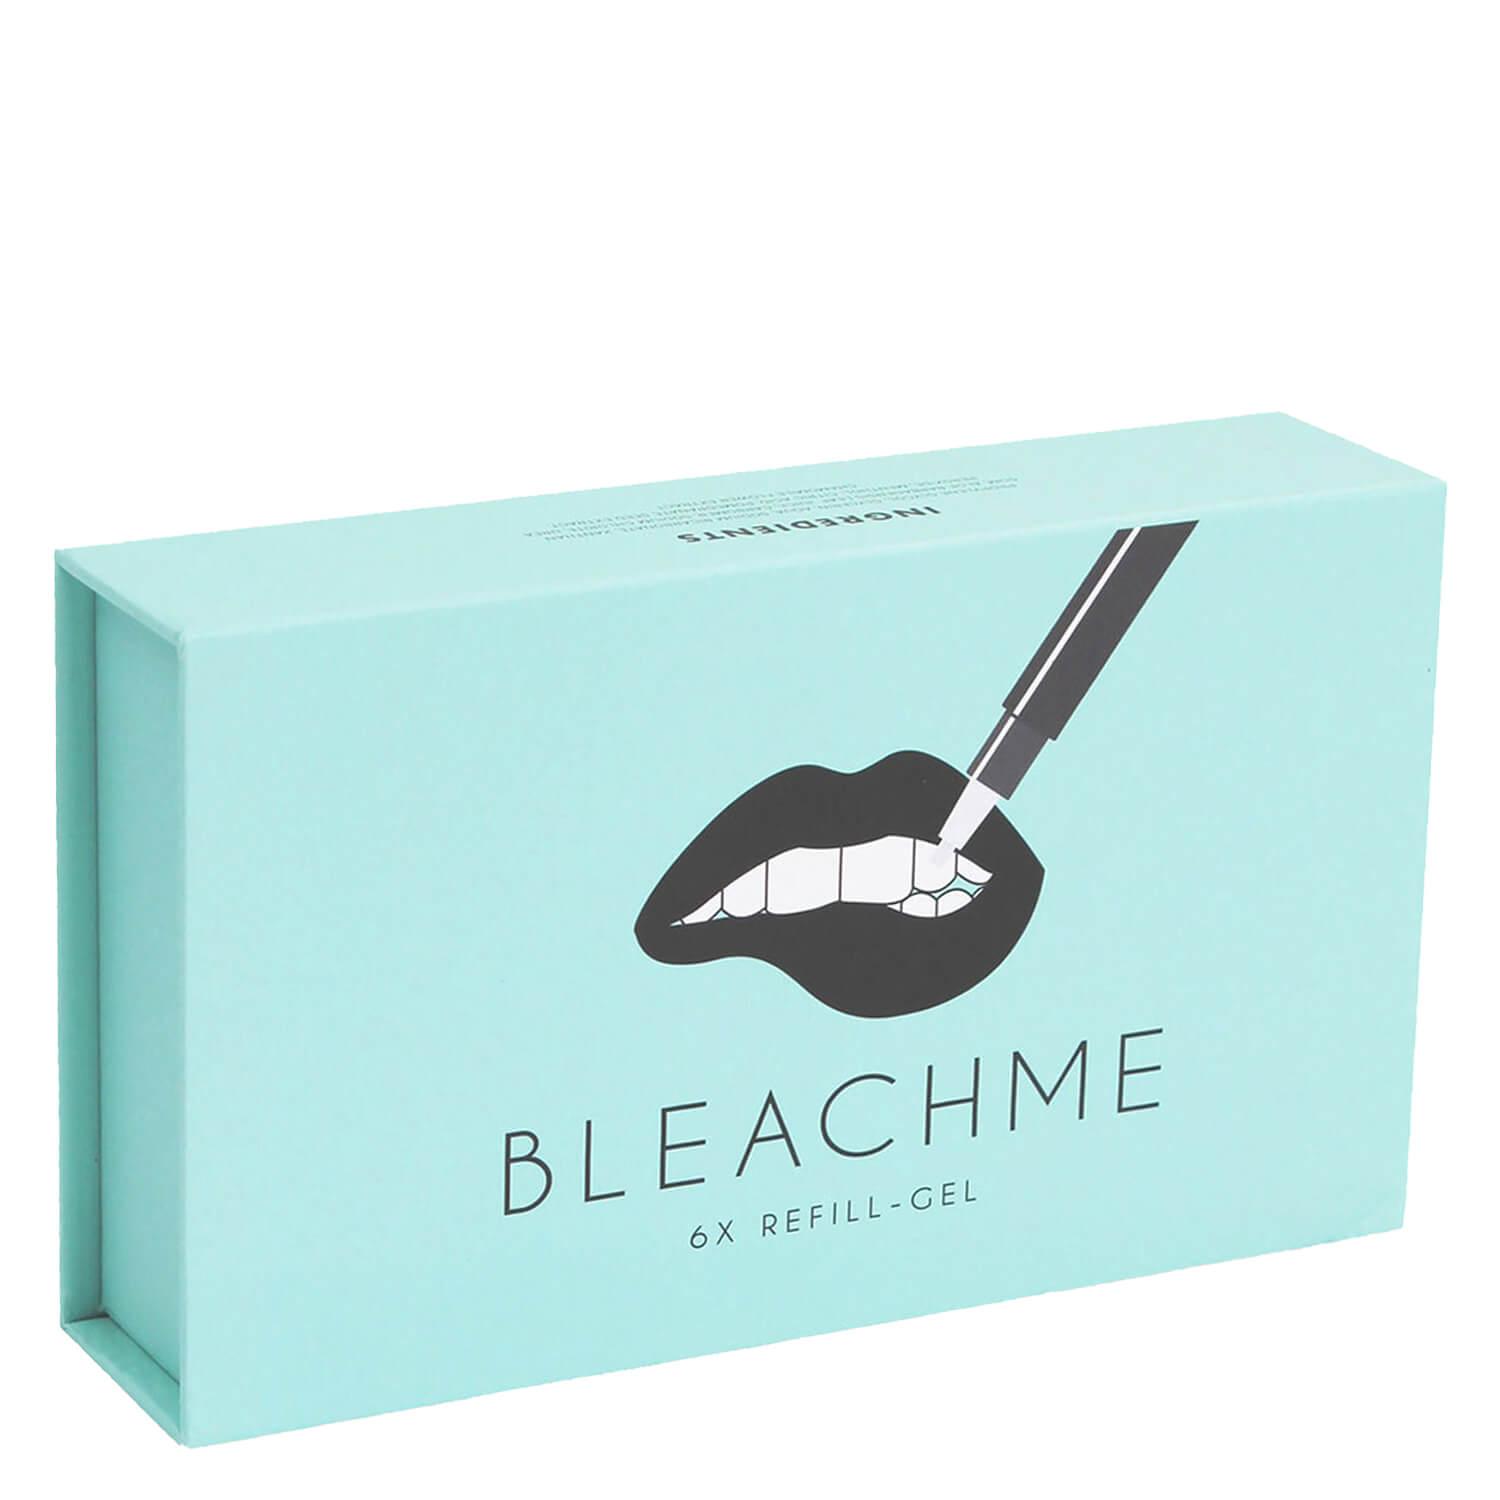 BleachMe - Refill Gel